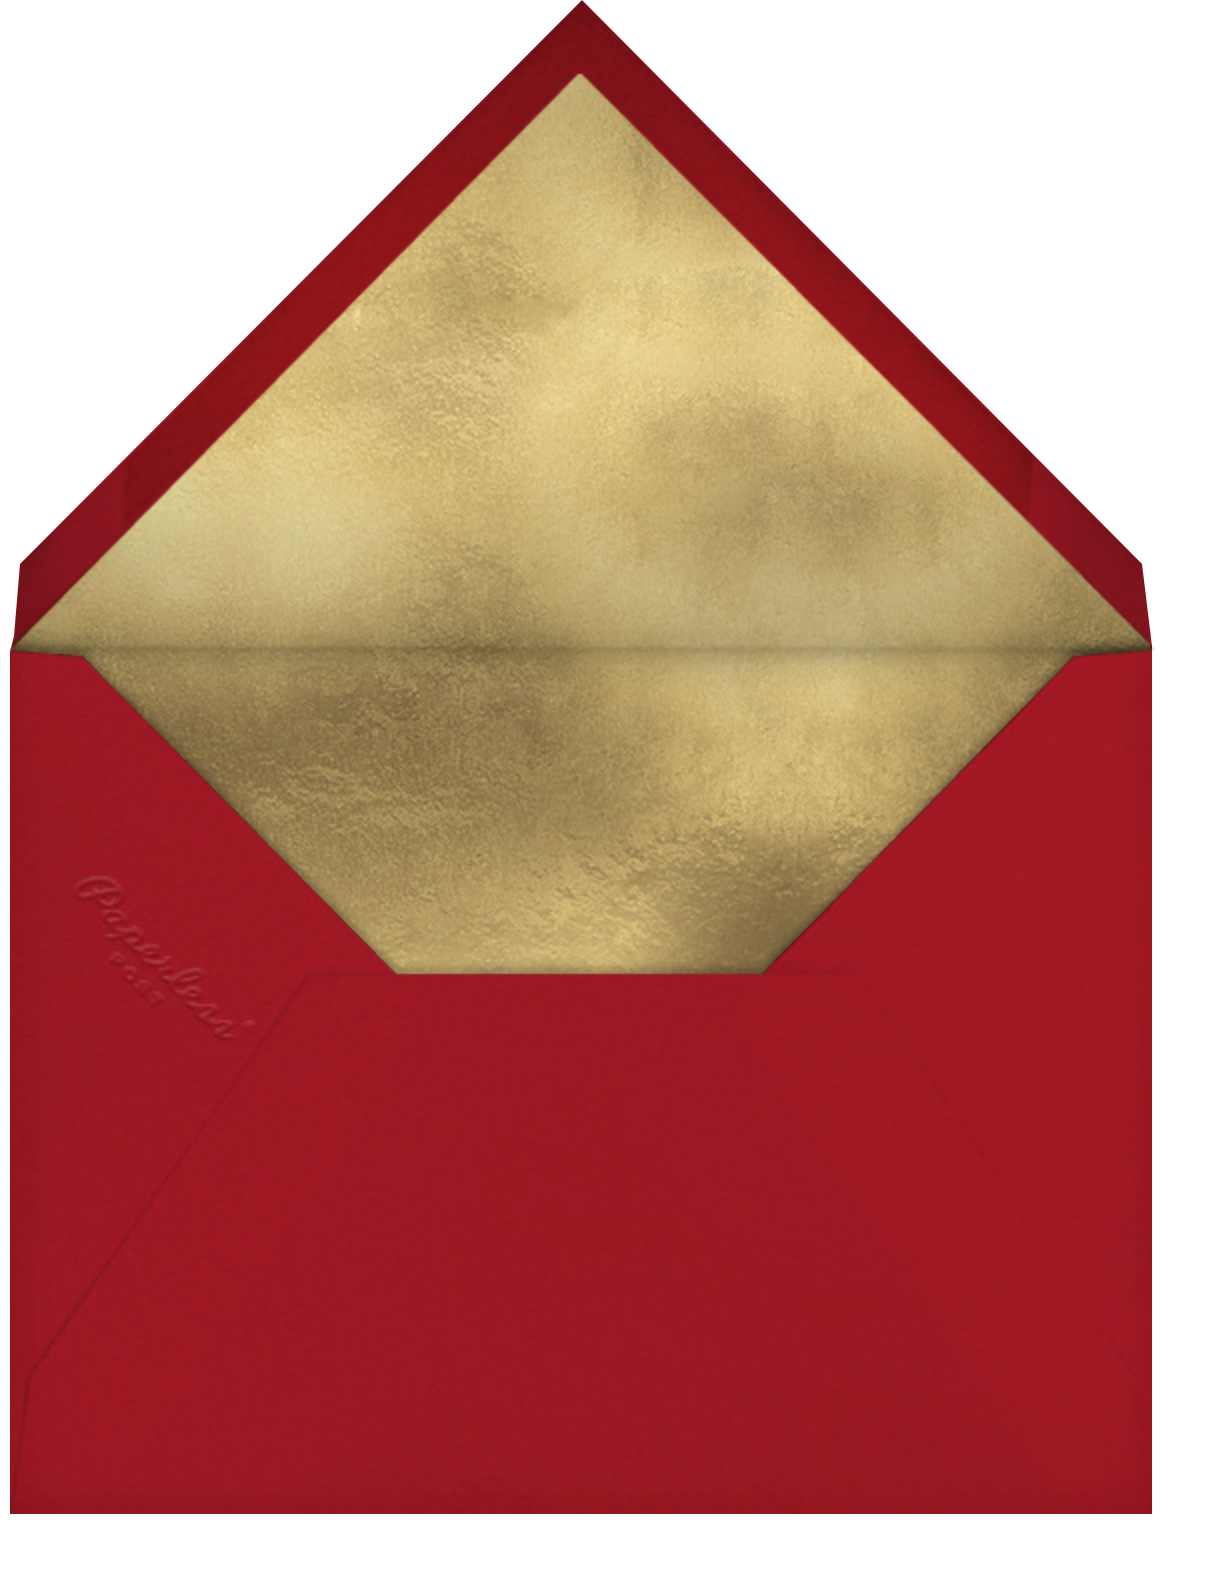 Hu (Greeting) - Paperless Post - Envelope